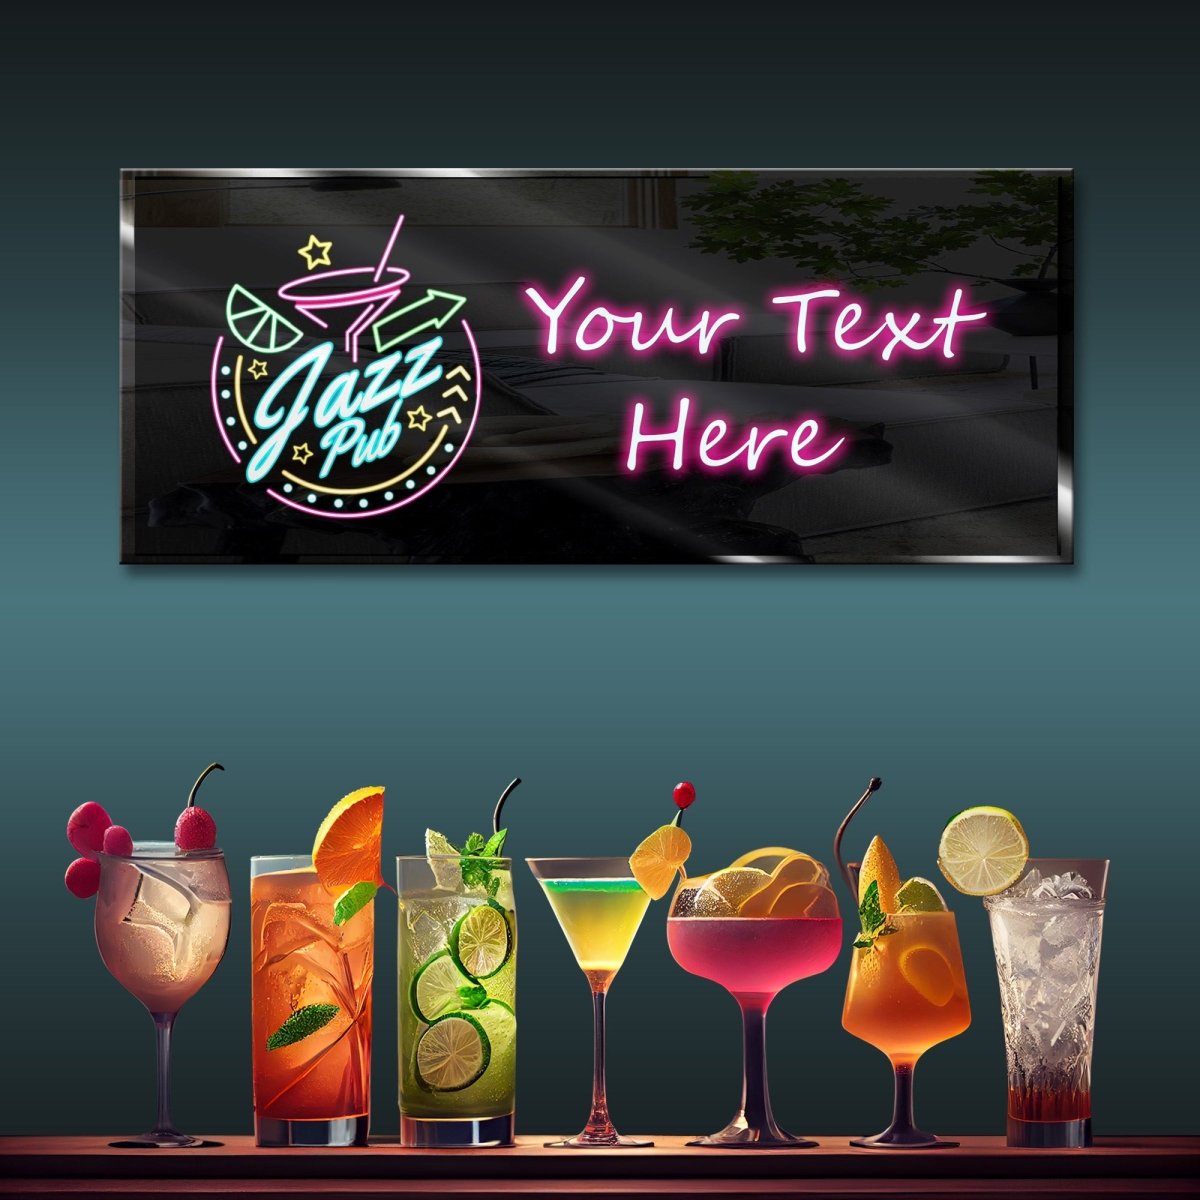 Personalized Neon Sign Jazz Pub - madaboutneon